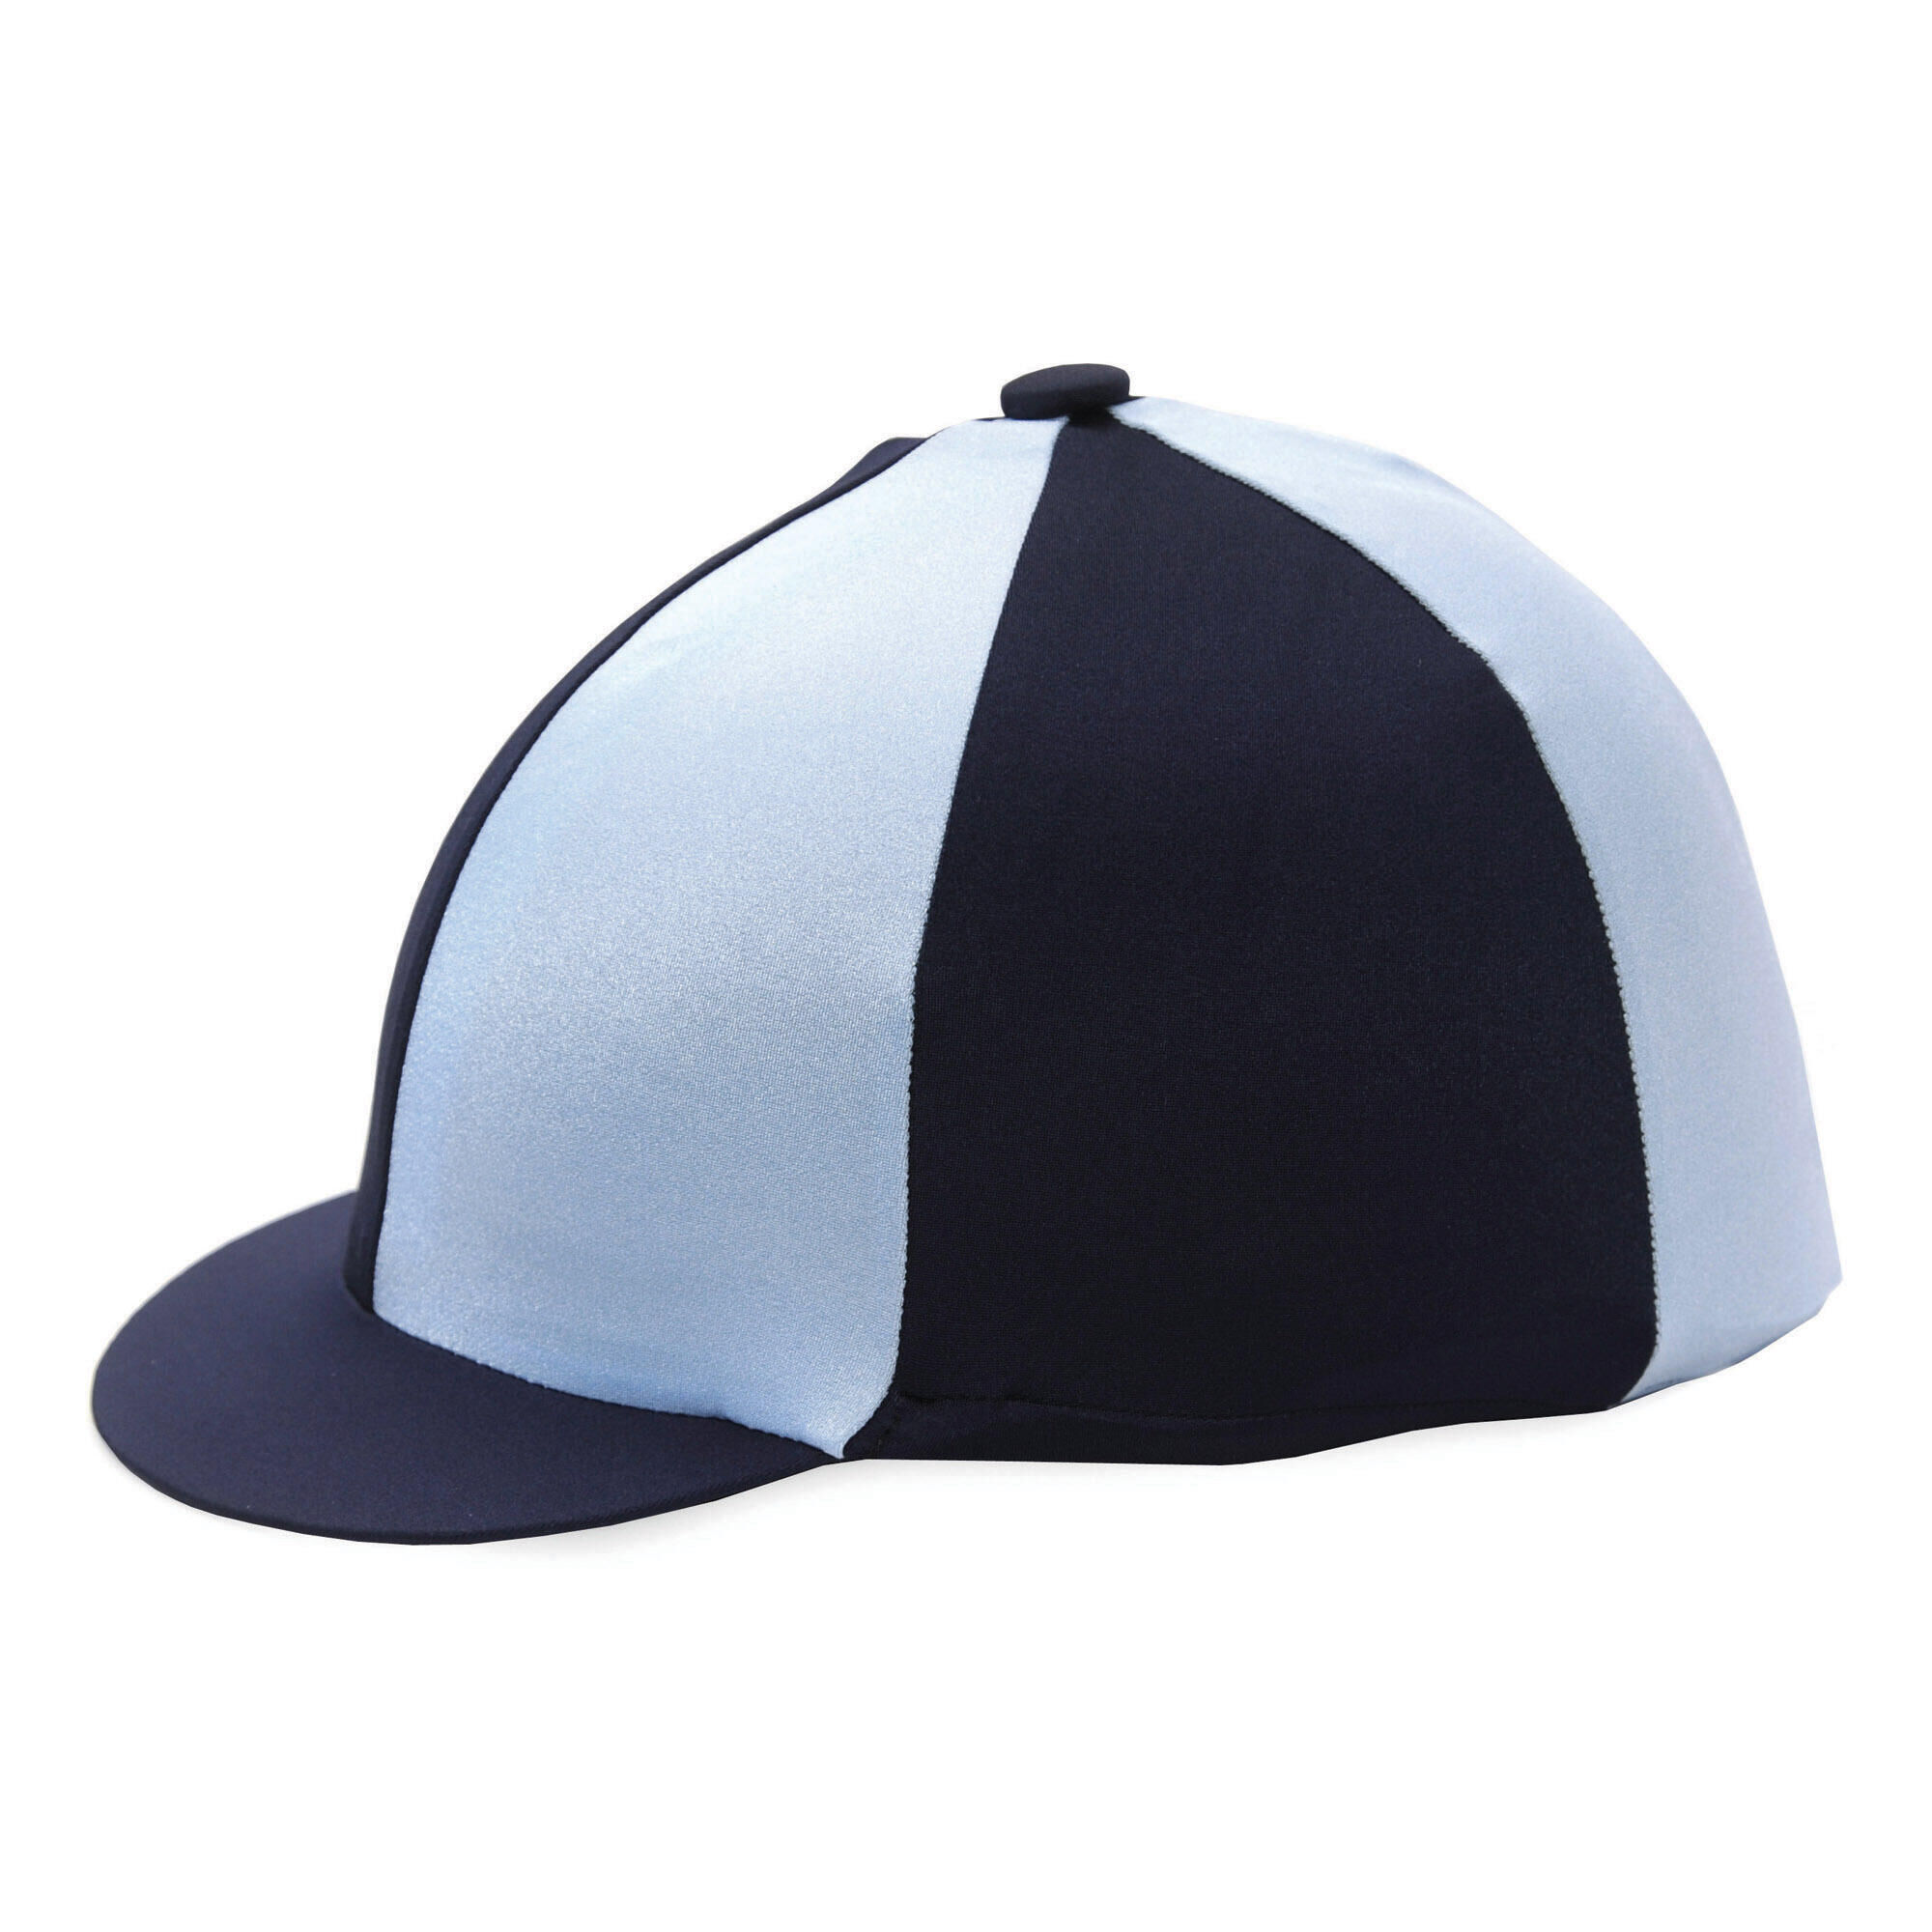 HY Hy hat silk Navy Pale blue